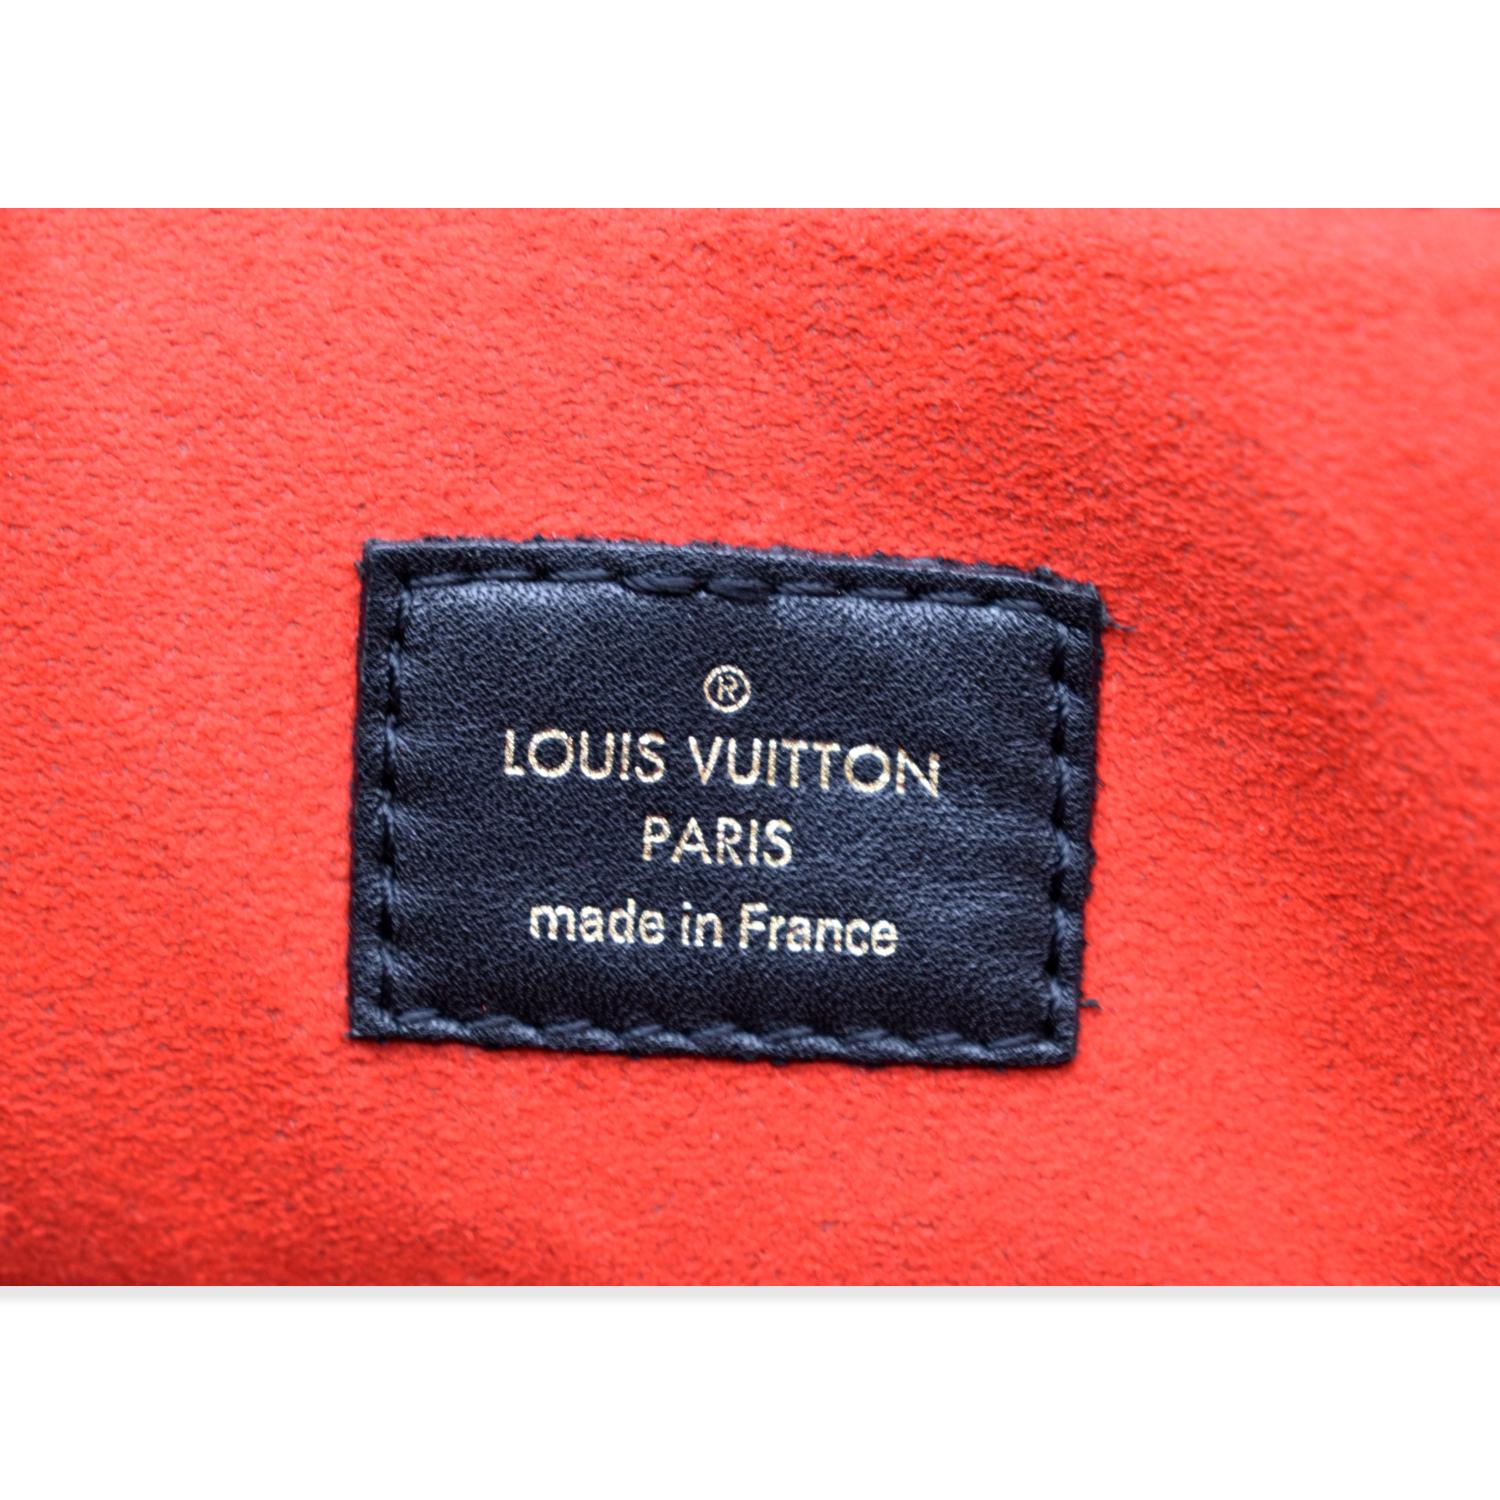 LOUIS VUITTON M41456 Tuileries Tote Caramel Tuilley Tote Bag. CHECK DESC